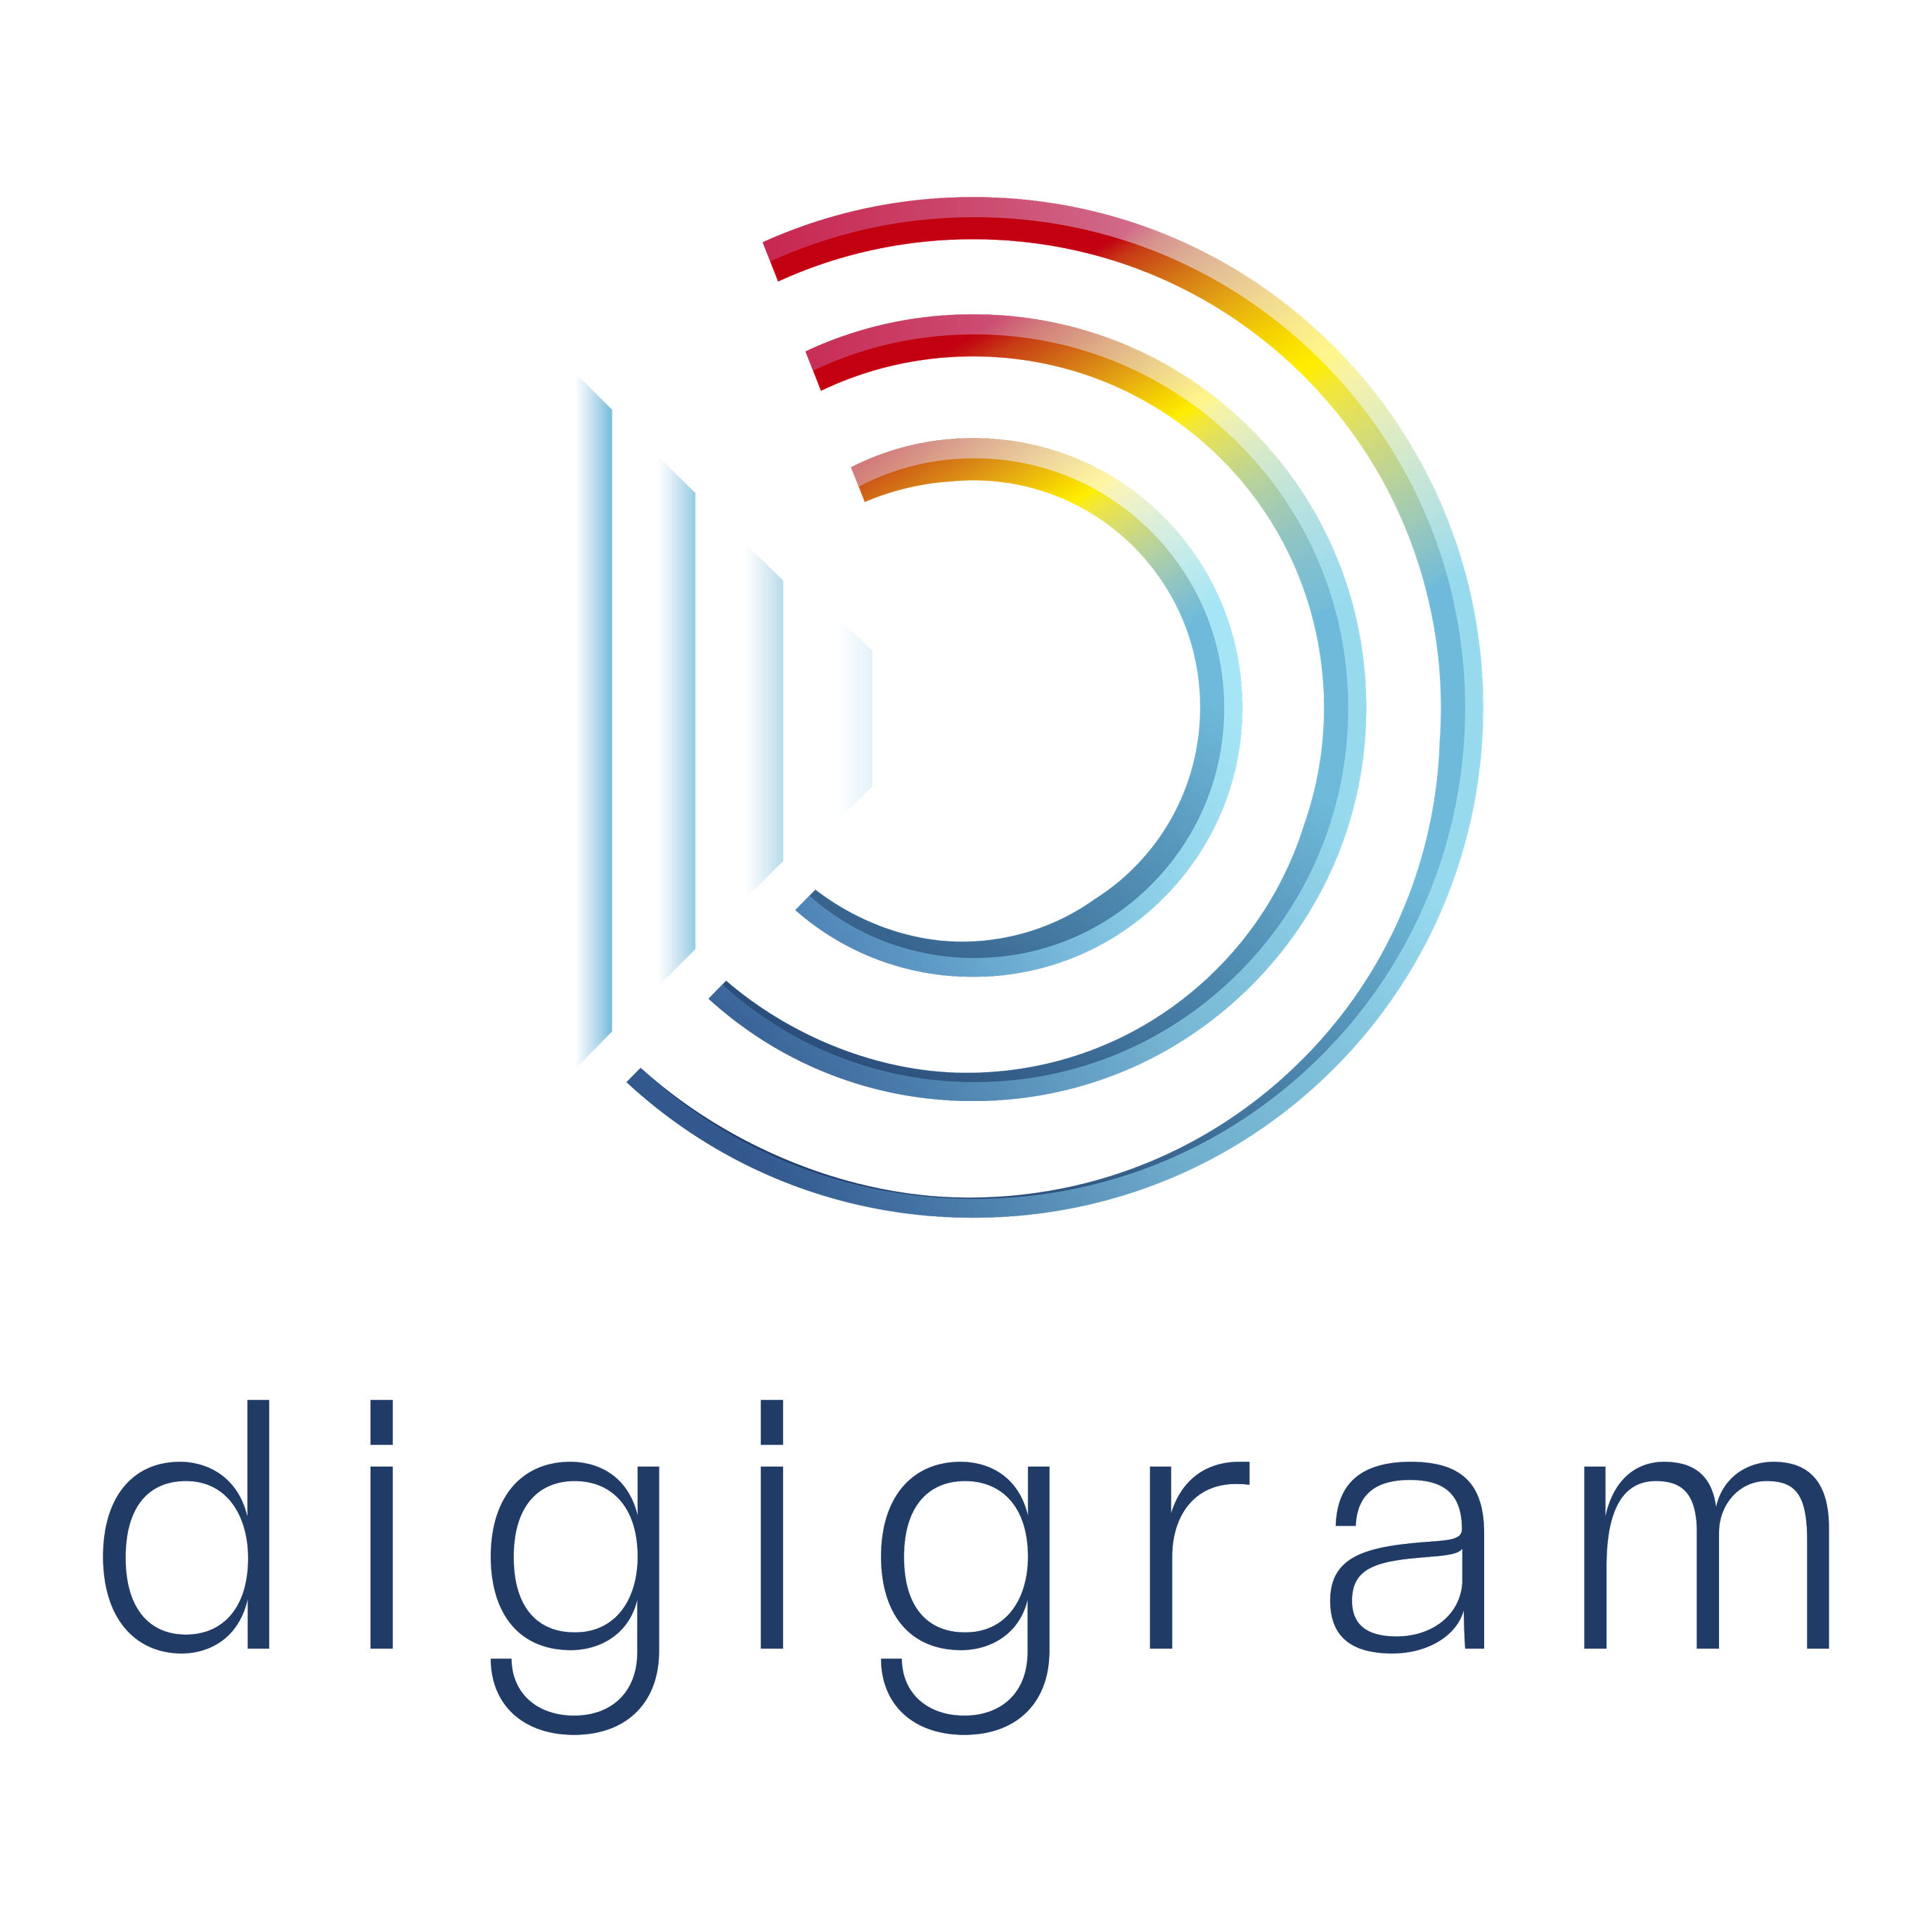 Digigram